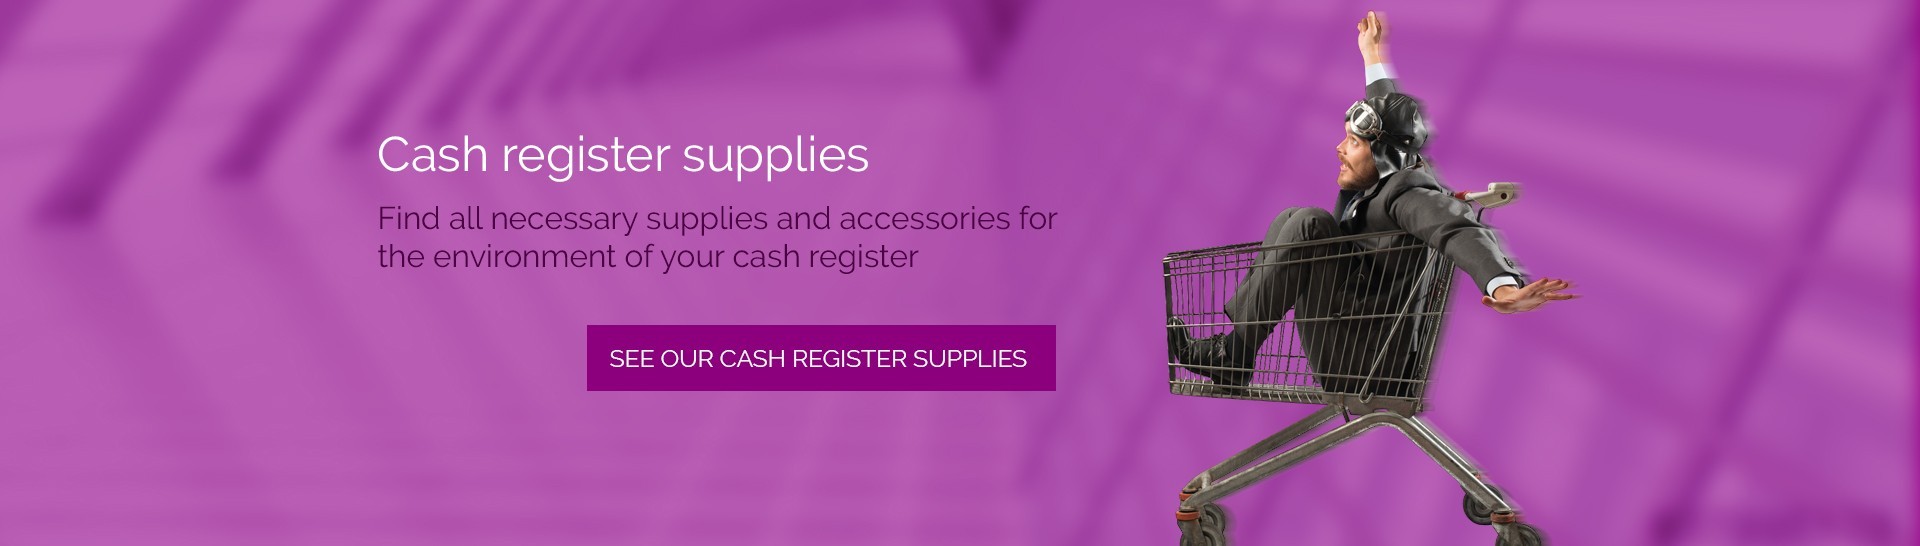 Cash register supplies